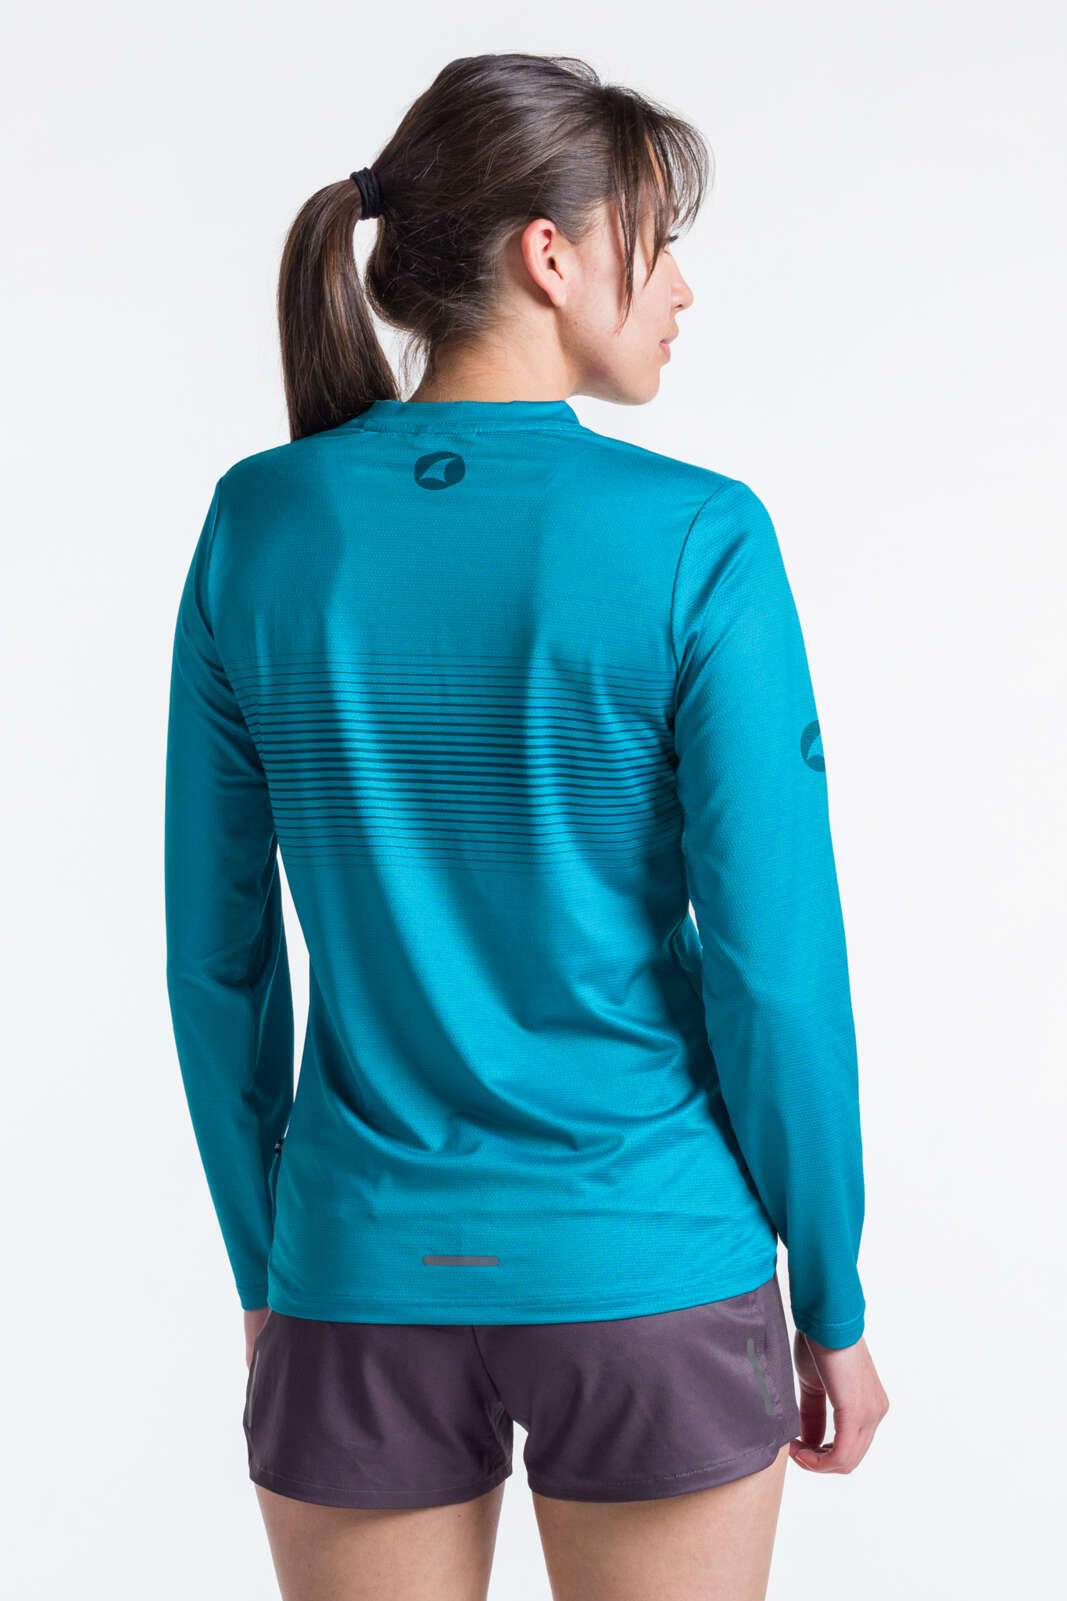 Women's Long Sleeve Running Shirt - Back View